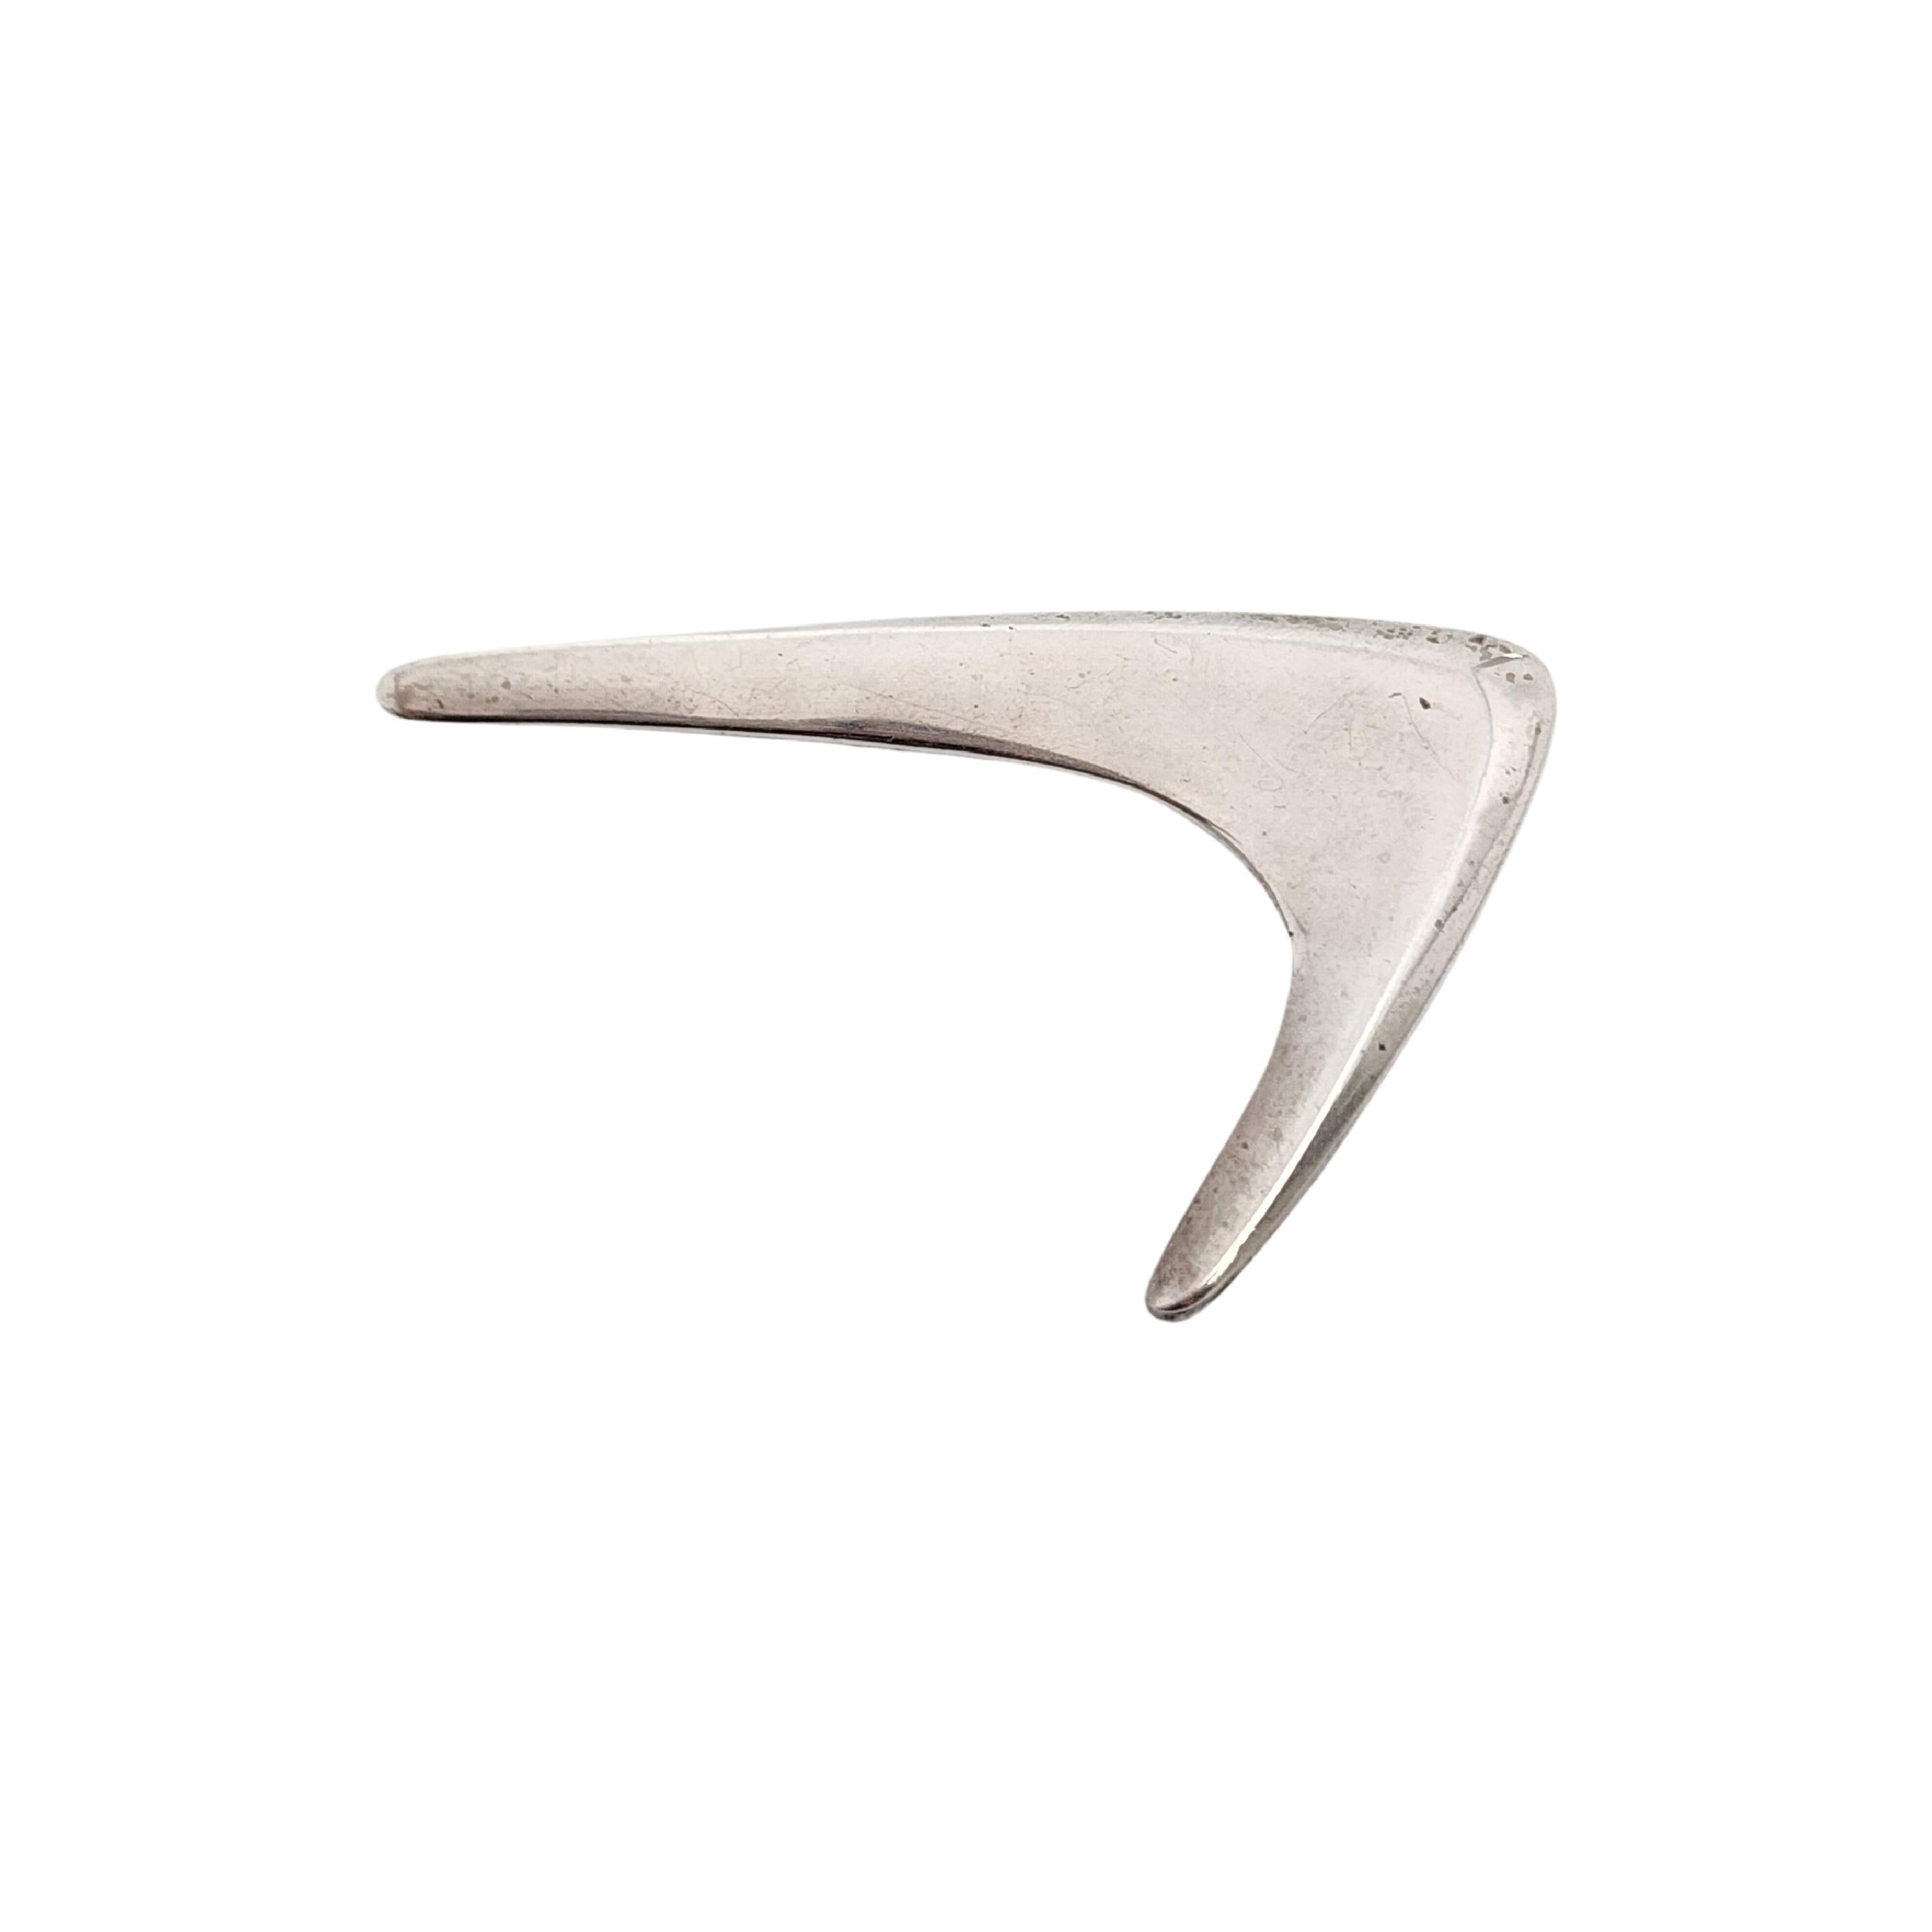 Sterling silver boomerang pin/brooch by Hermann Siersbol of Denmark.

Modernist boomerang shaped pin/brooch.

Measures approx 2 1/8